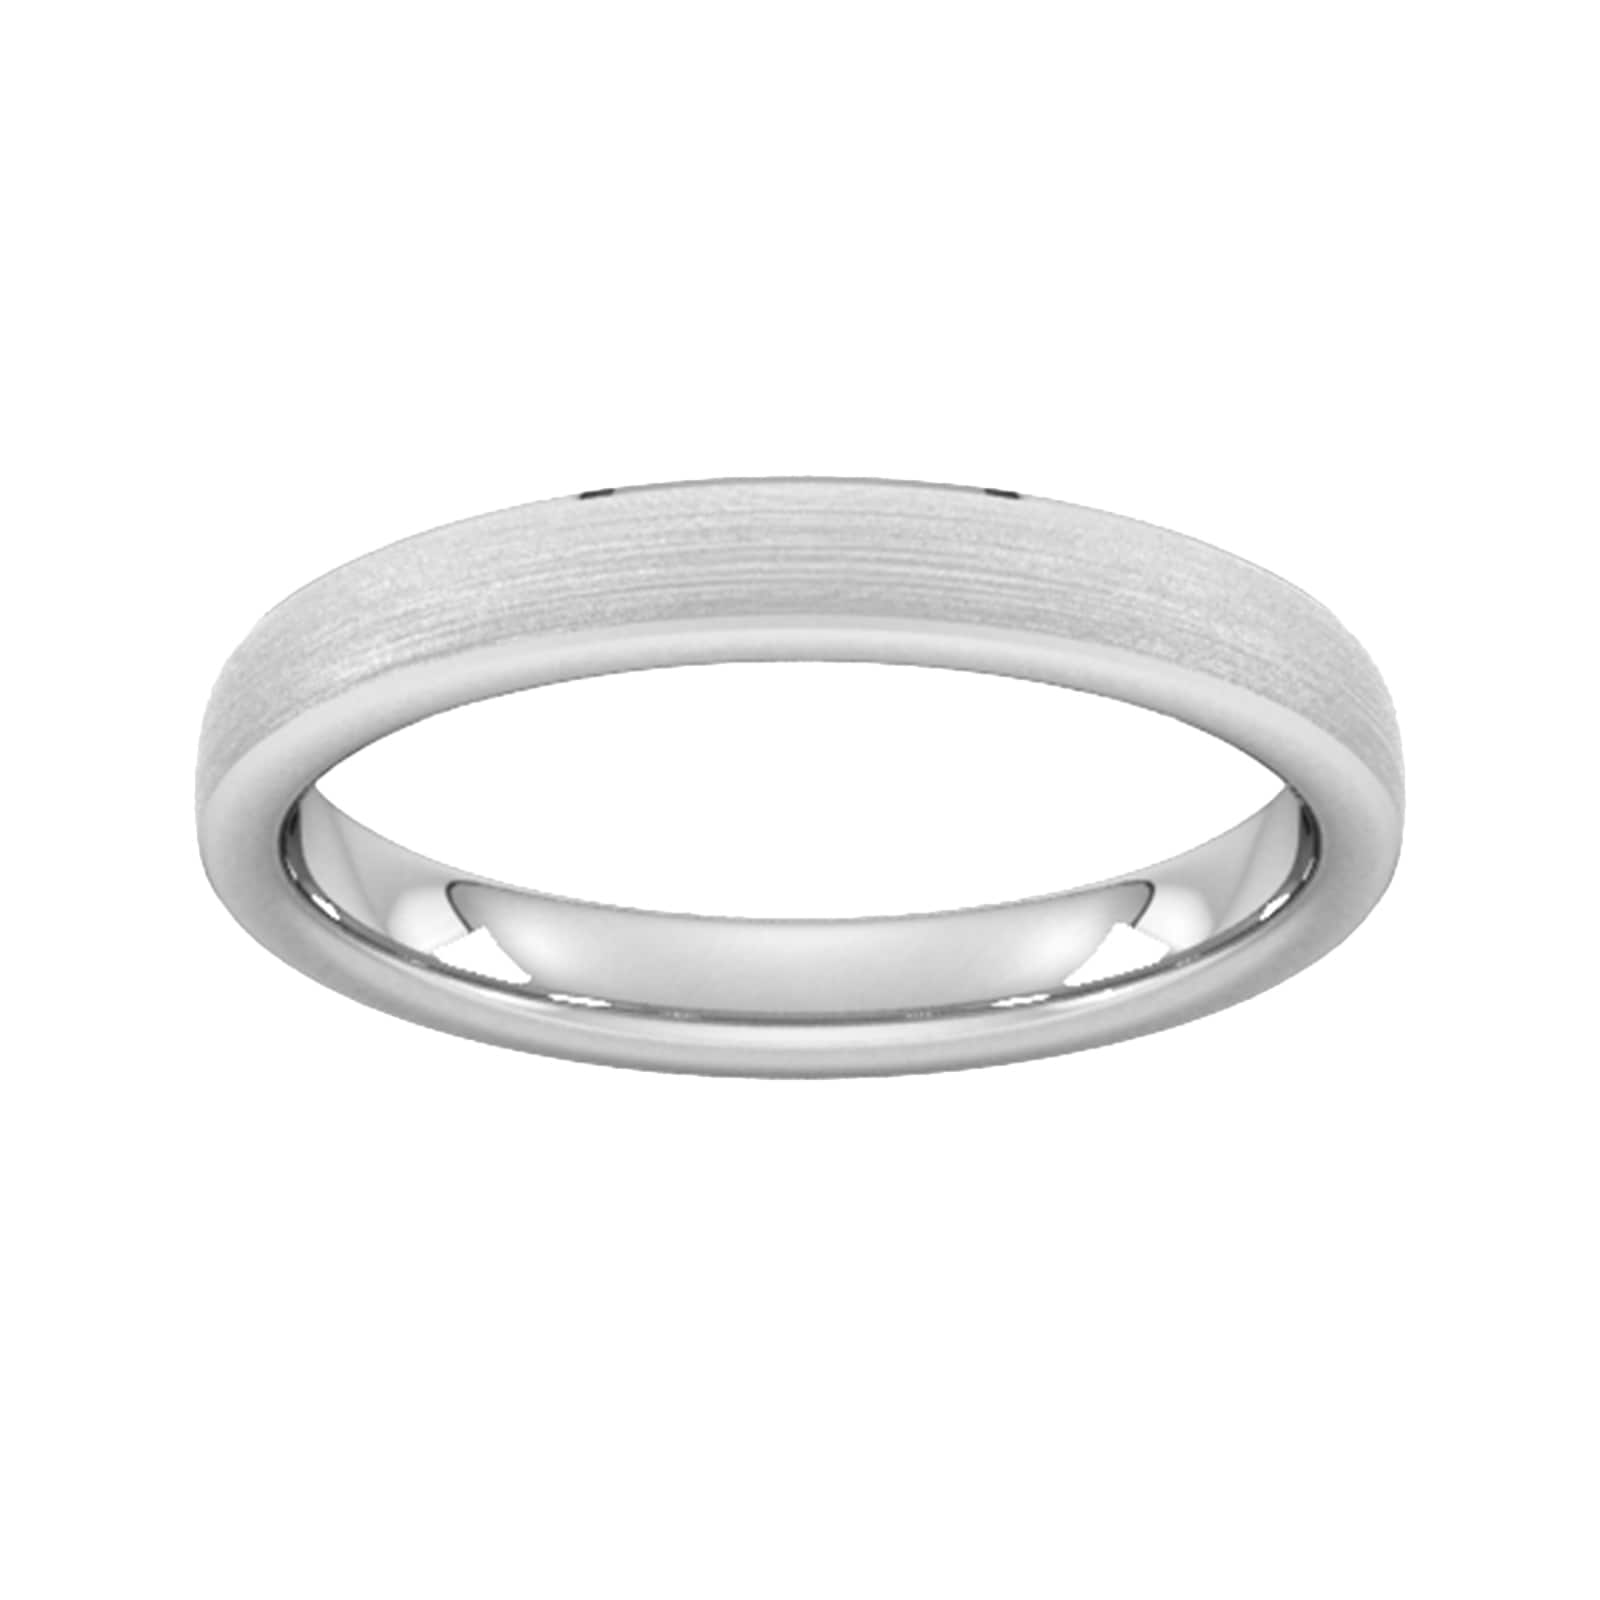 3mm Slight Court Standard Polished Chamfered Edges With Matt Centre Wedding Ring In 950 Palladium - Ring Size J